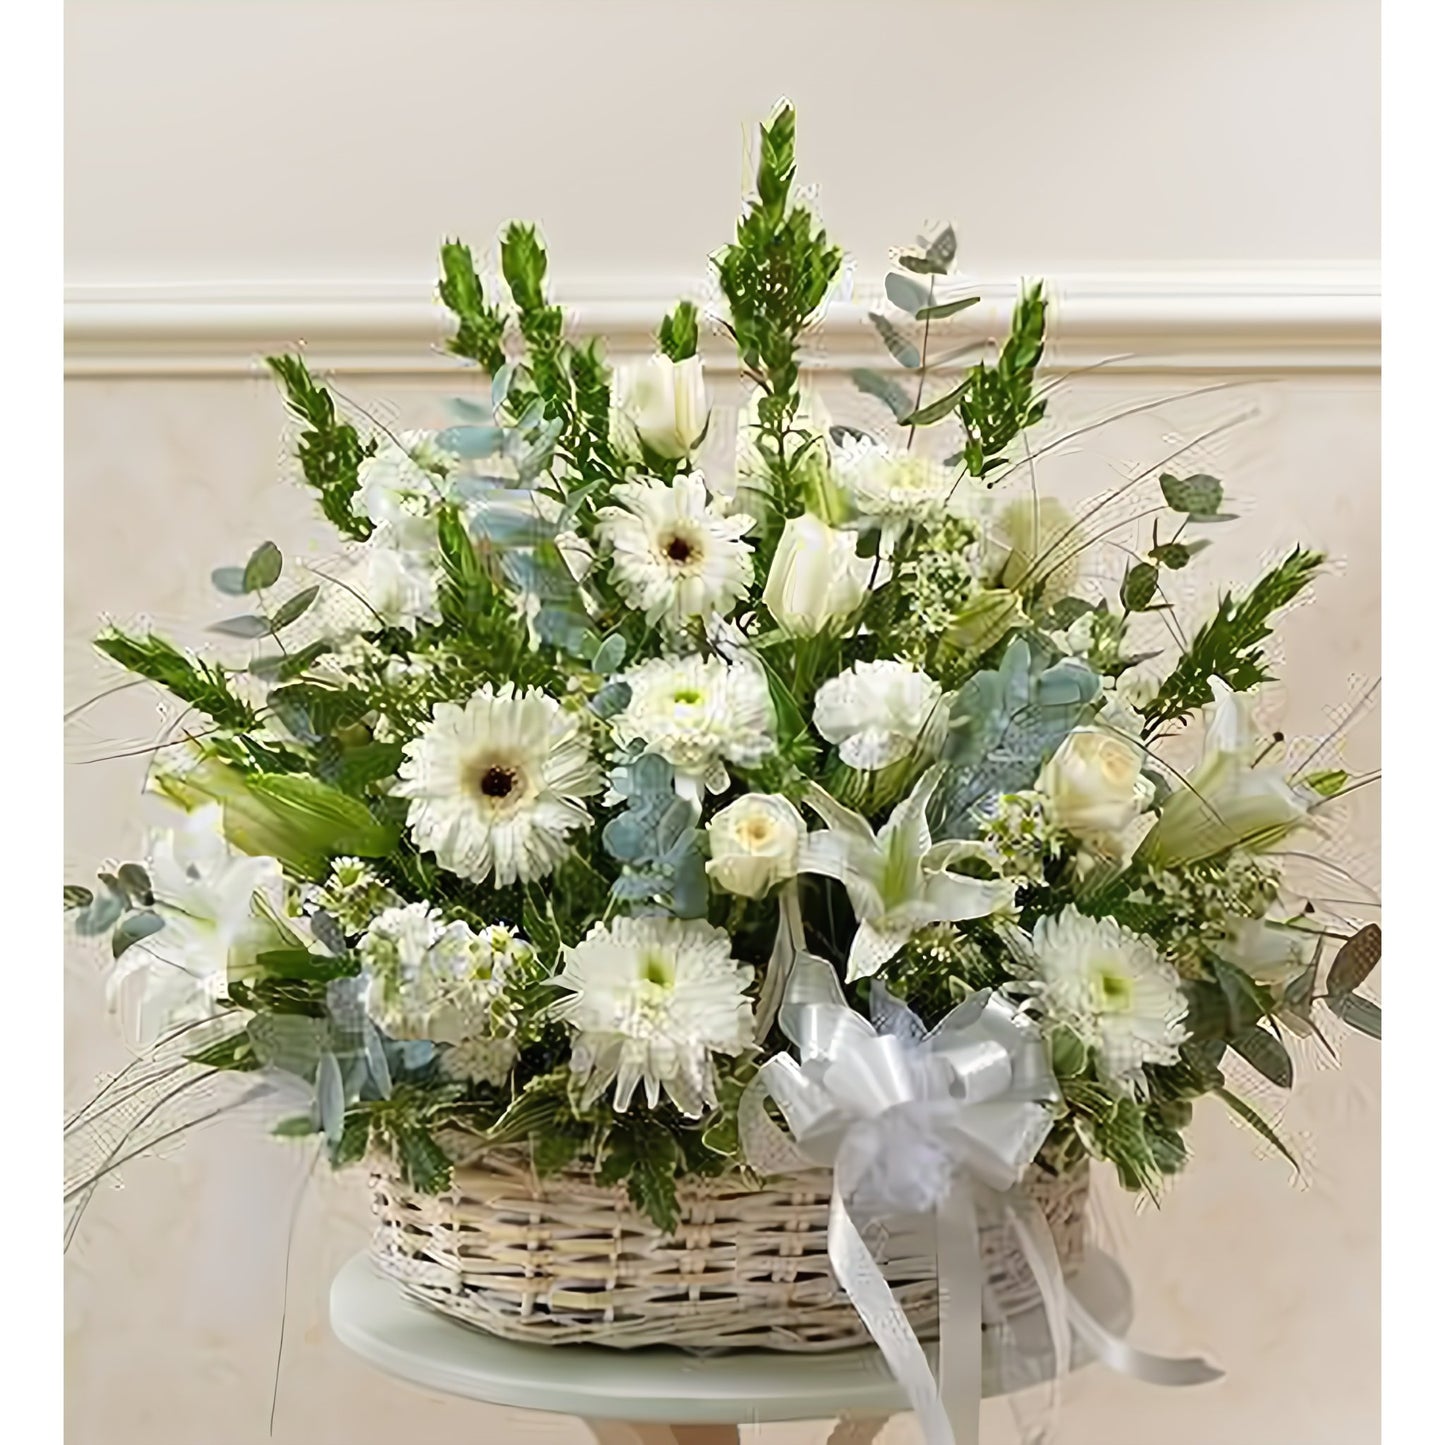 White Sympathy Arrangement in Basket - Floral Arrangement - Flower Delivery Brooklyn